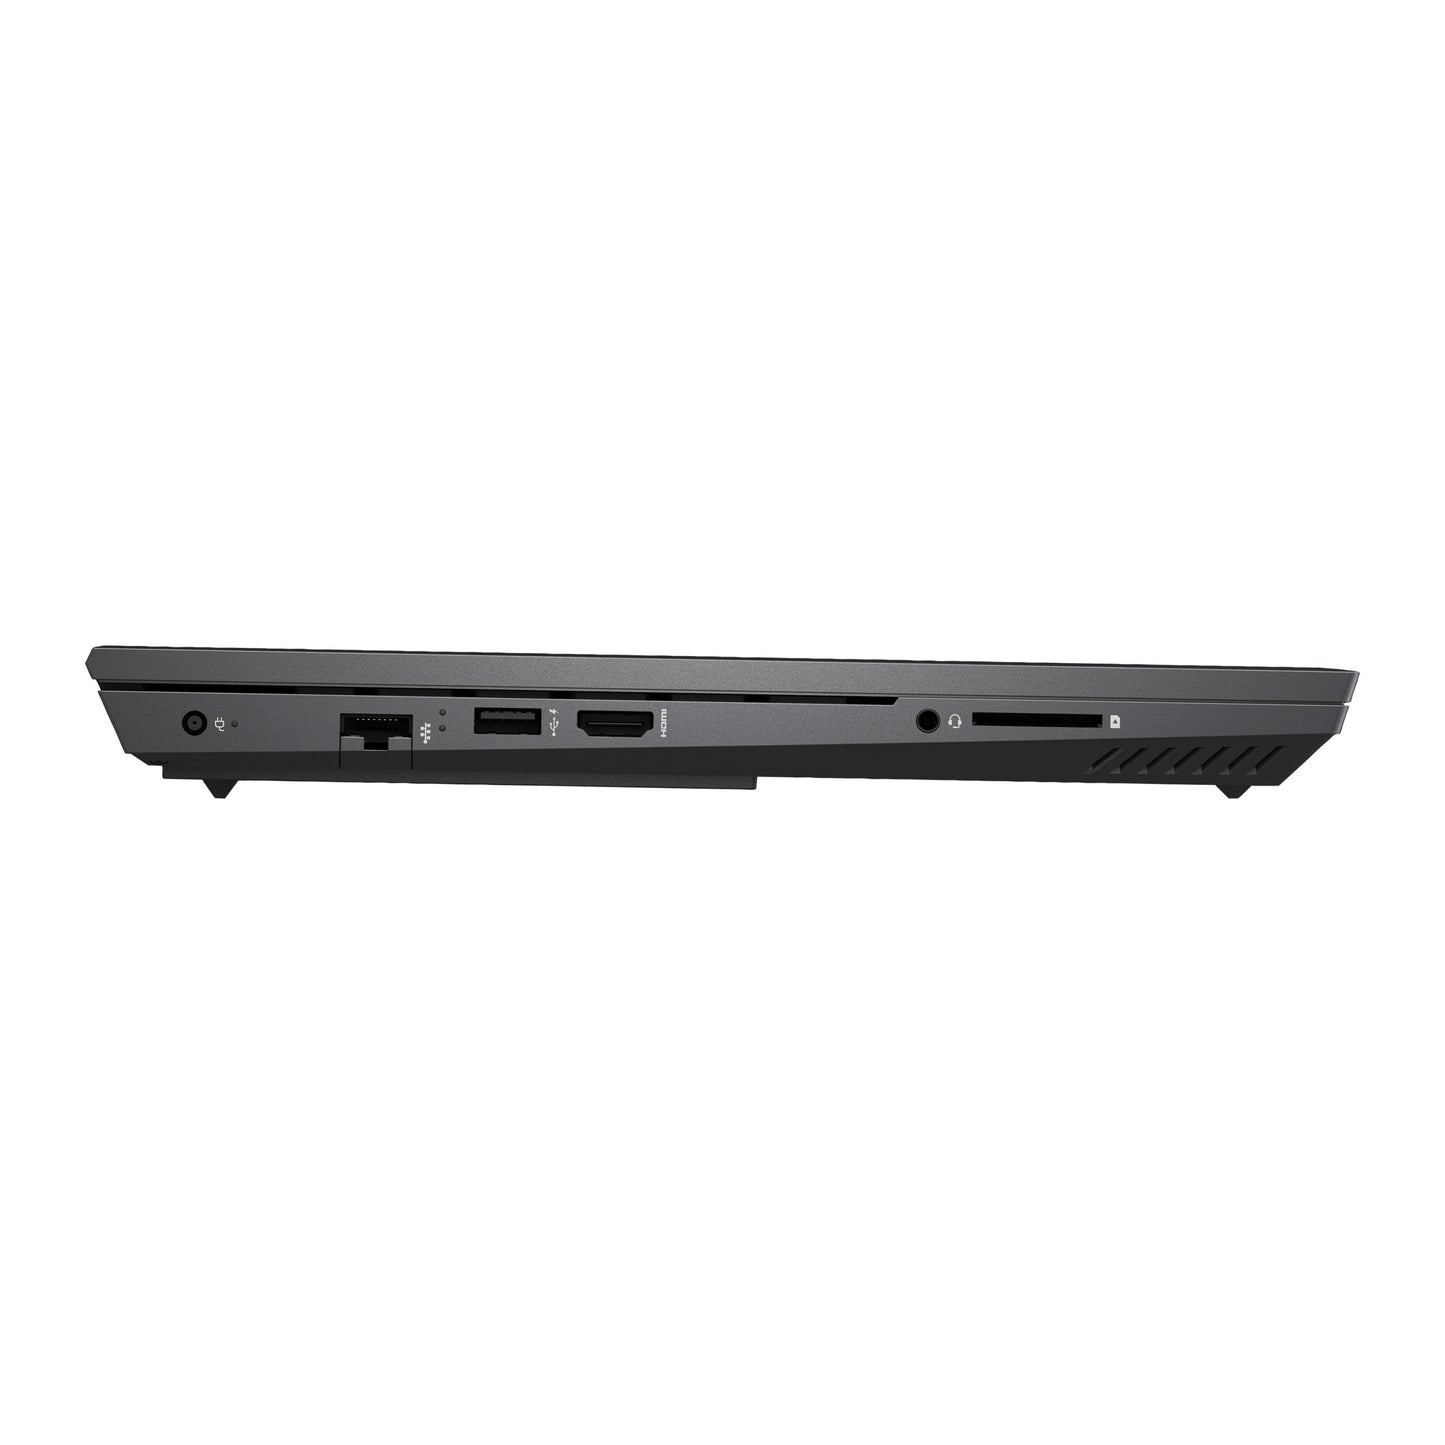 HP Omen 15-EN0023 Ryzen 7 4800h Gtx 1660 Ti 144hz Gaming Laptops (New OB)